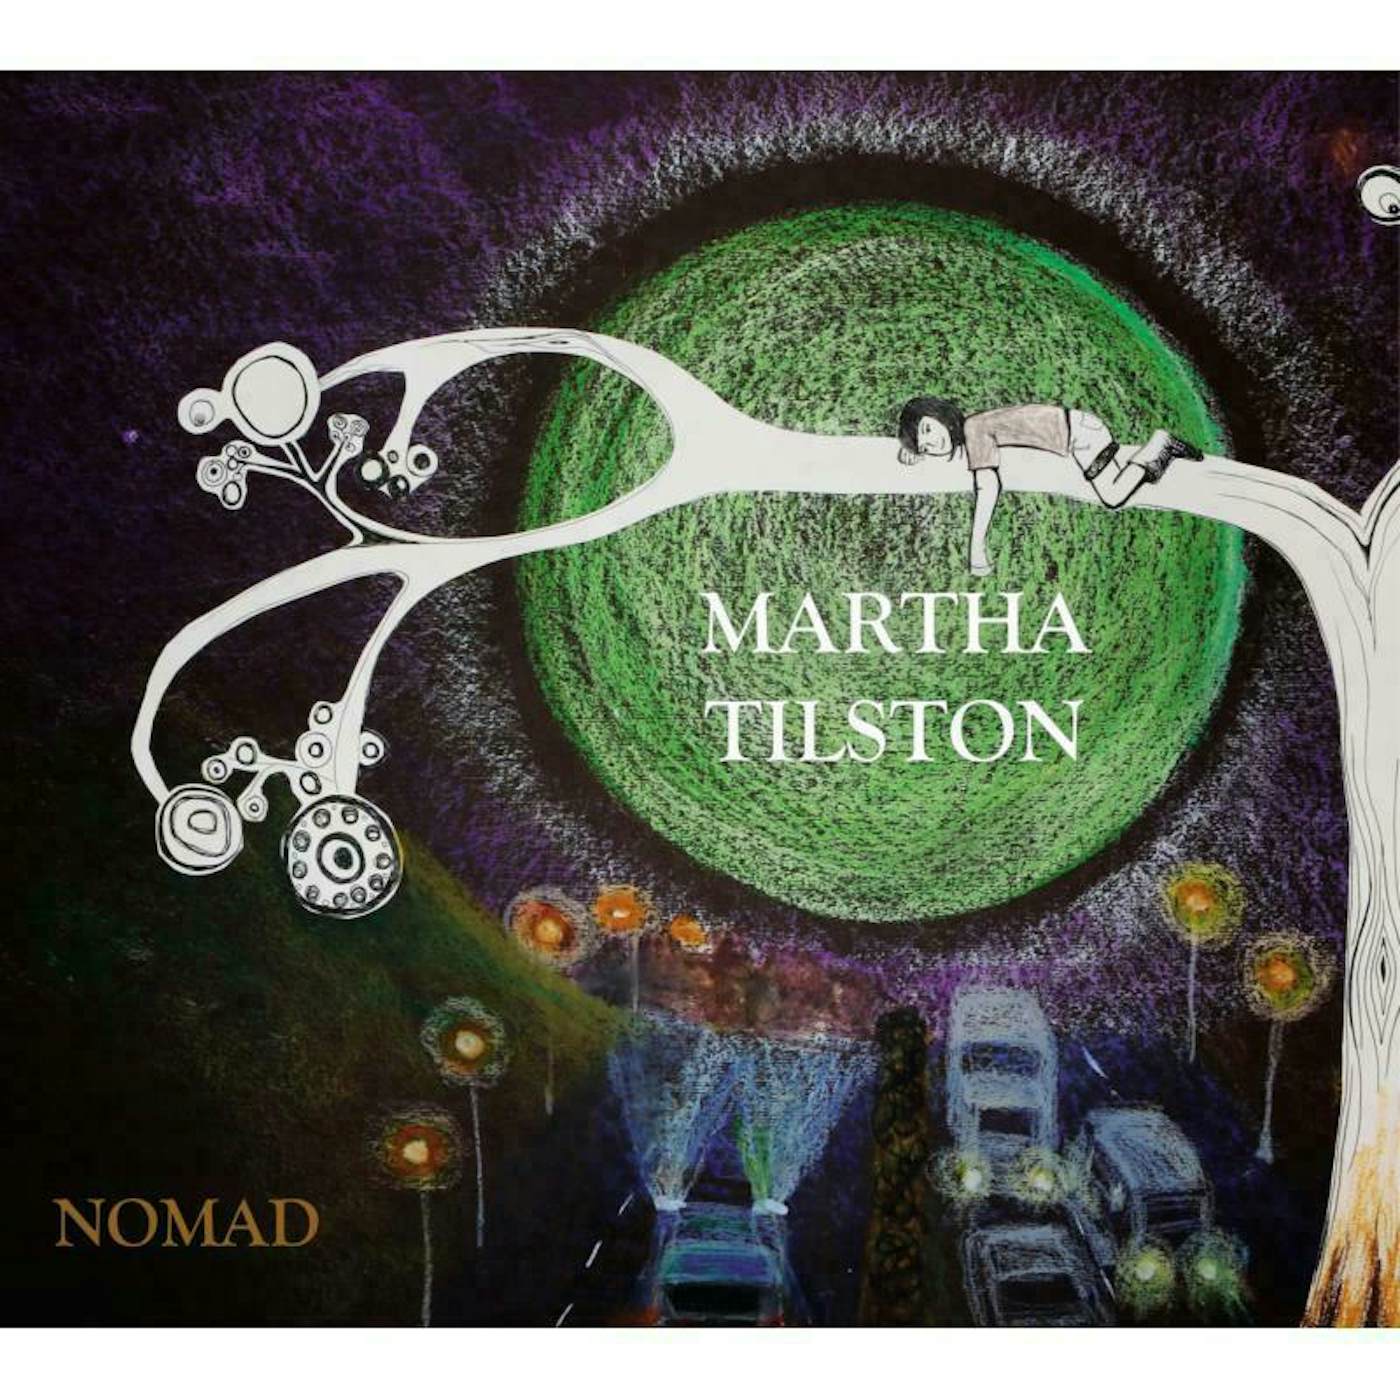 Martha Tilston LP - Nomad (Vinyl)